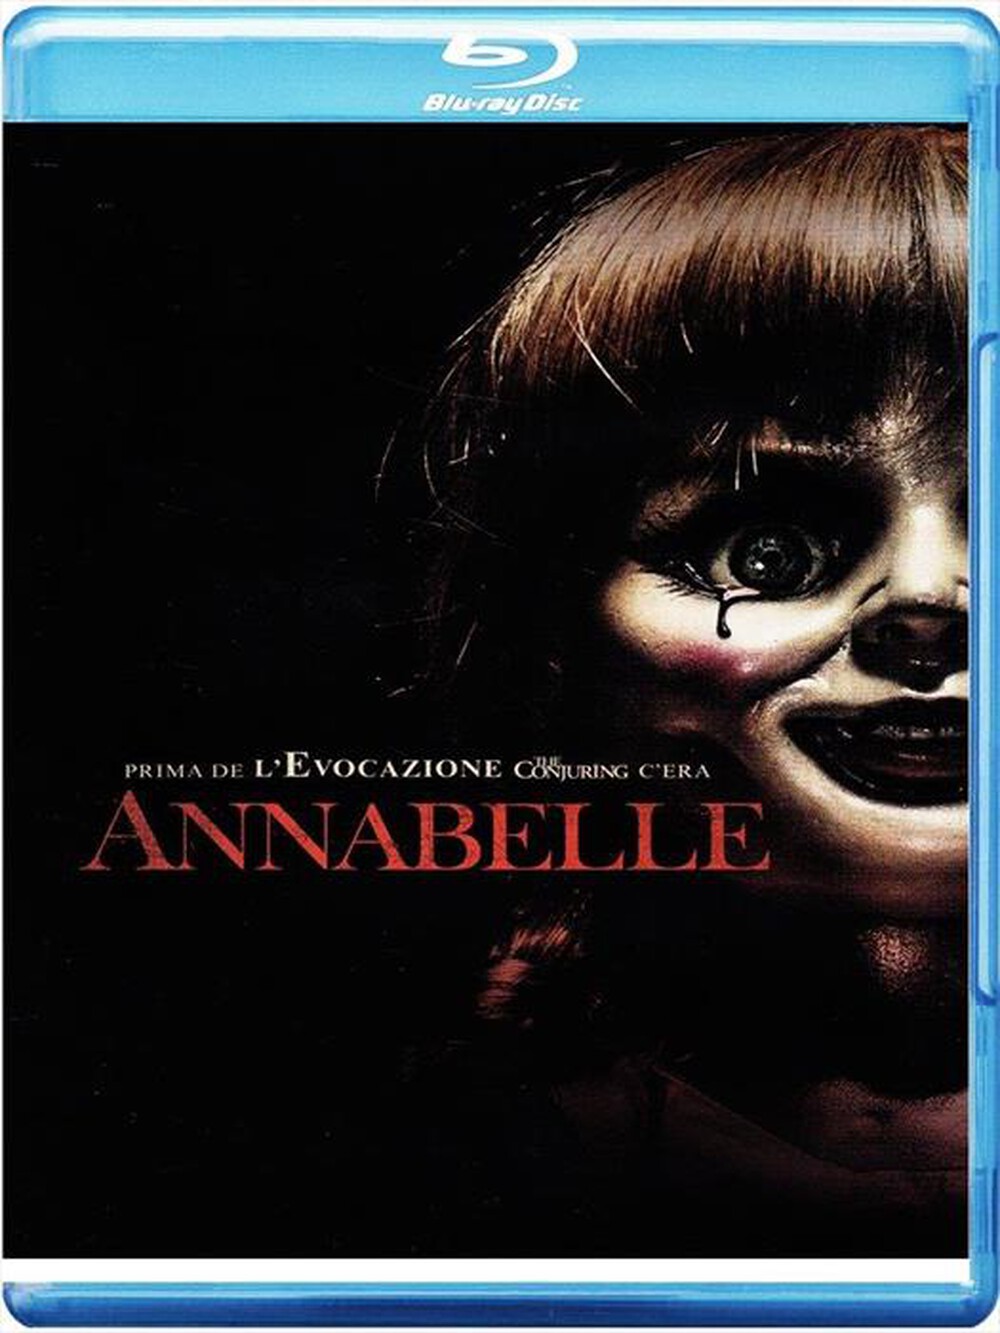 "WARNER HOME VIDEO - Annabelle - "